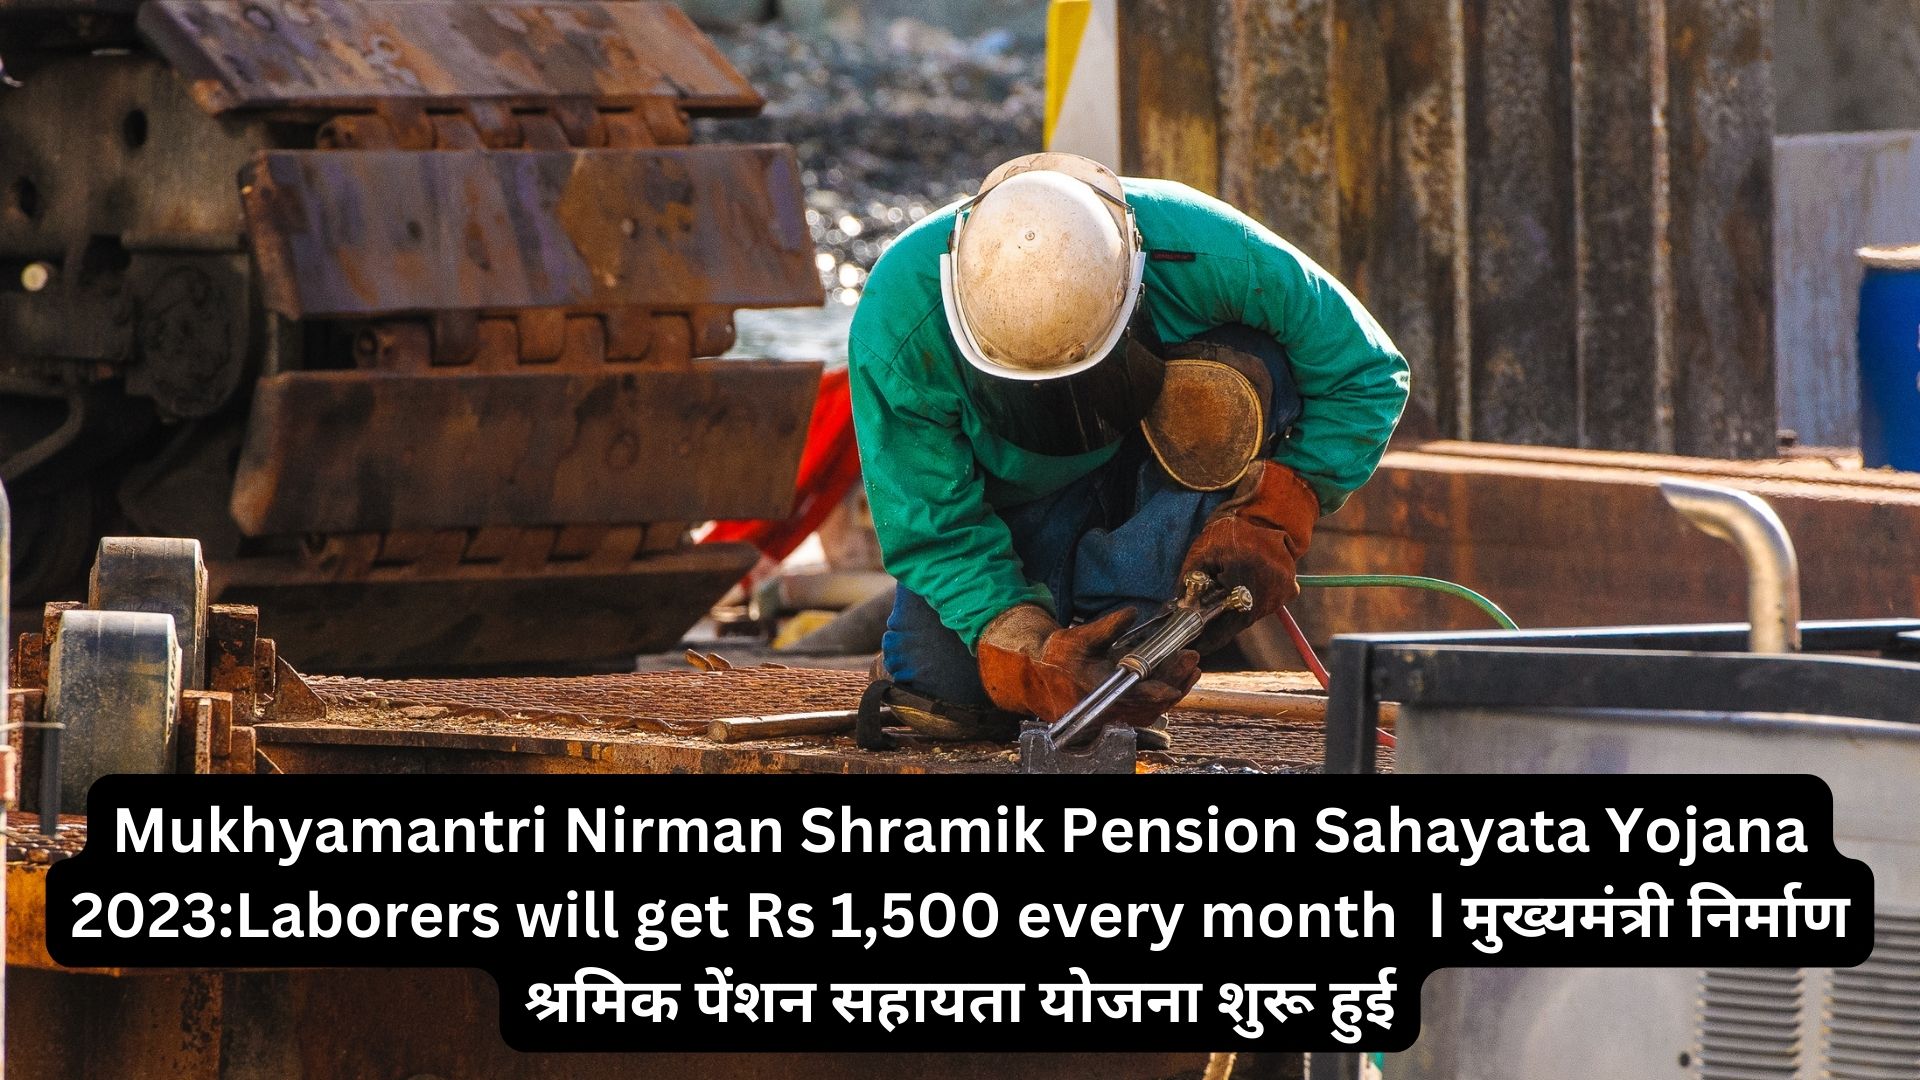 Mukhyamantri Nirman Shramik Pension Sahayata Yojana 2023:Laborers will get Rs 1,500 every month I मुख्यमंत्री निर्माण श्रमिक पेंशन सहायता योजना शुरू हुई